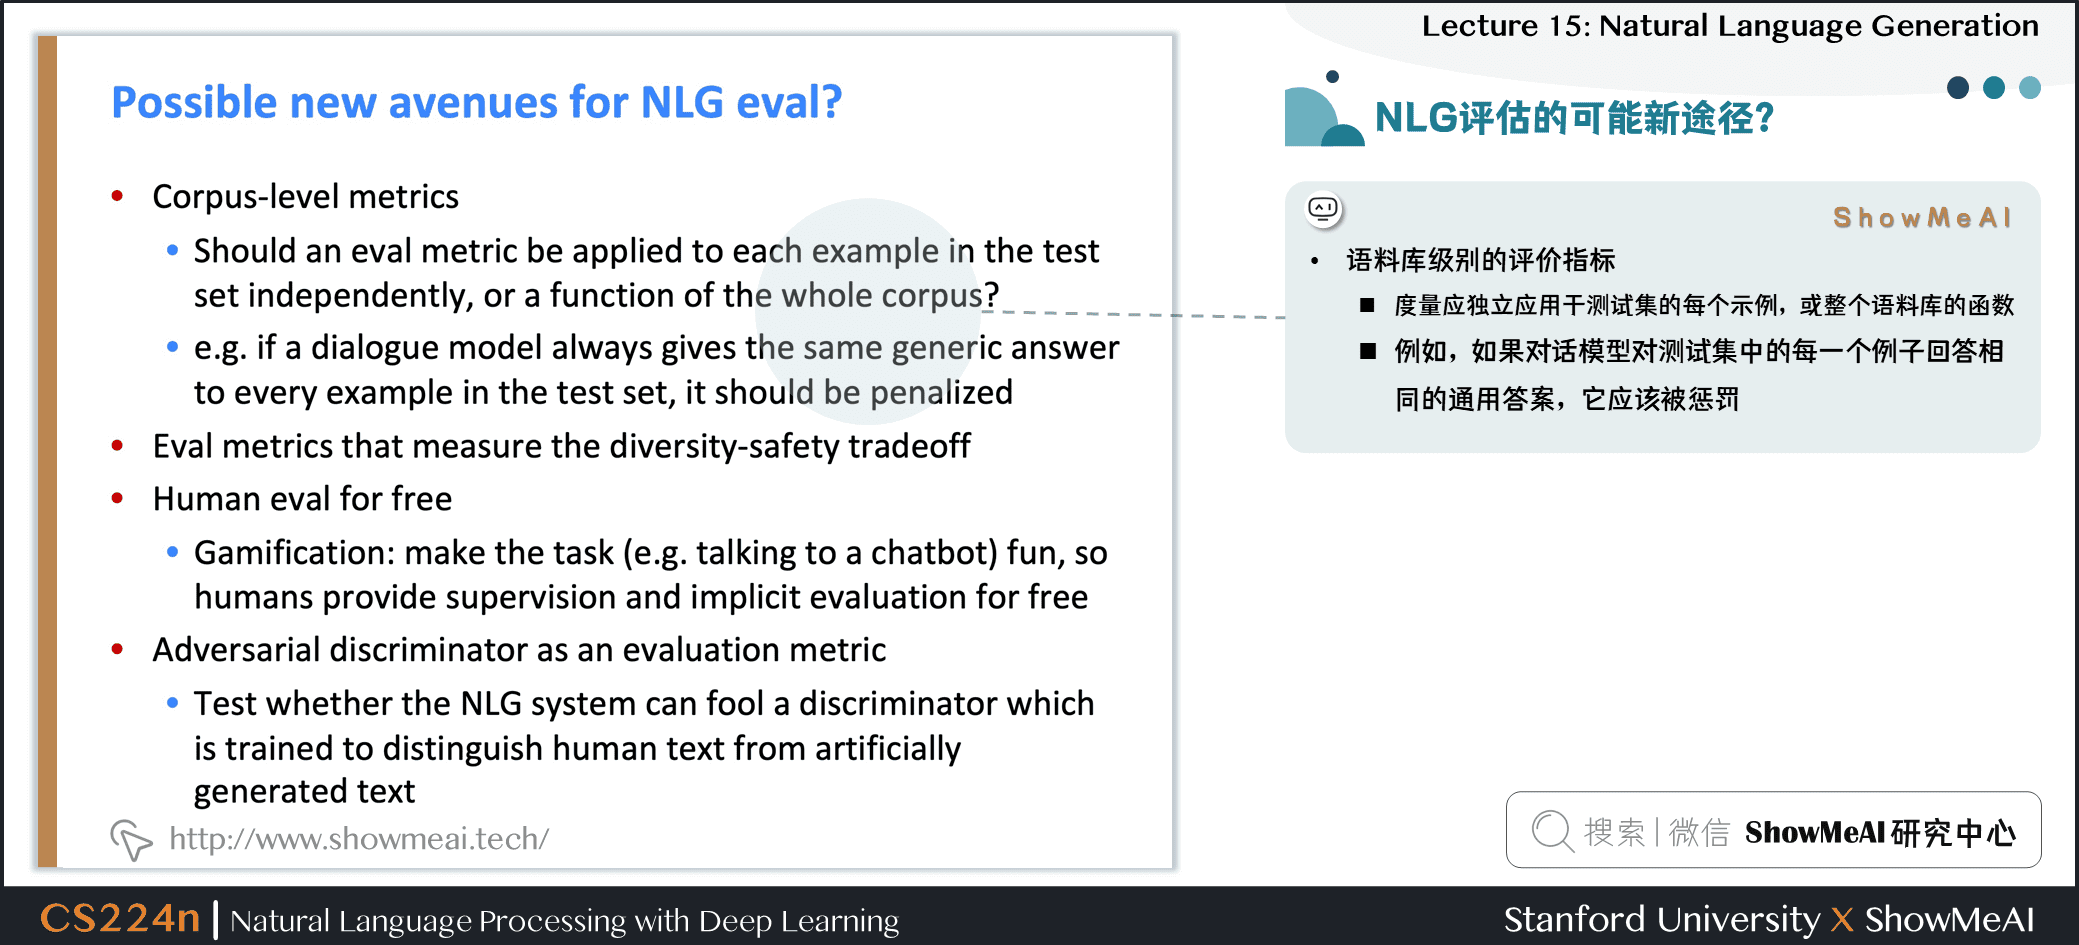 NLG评估的可能新途径？